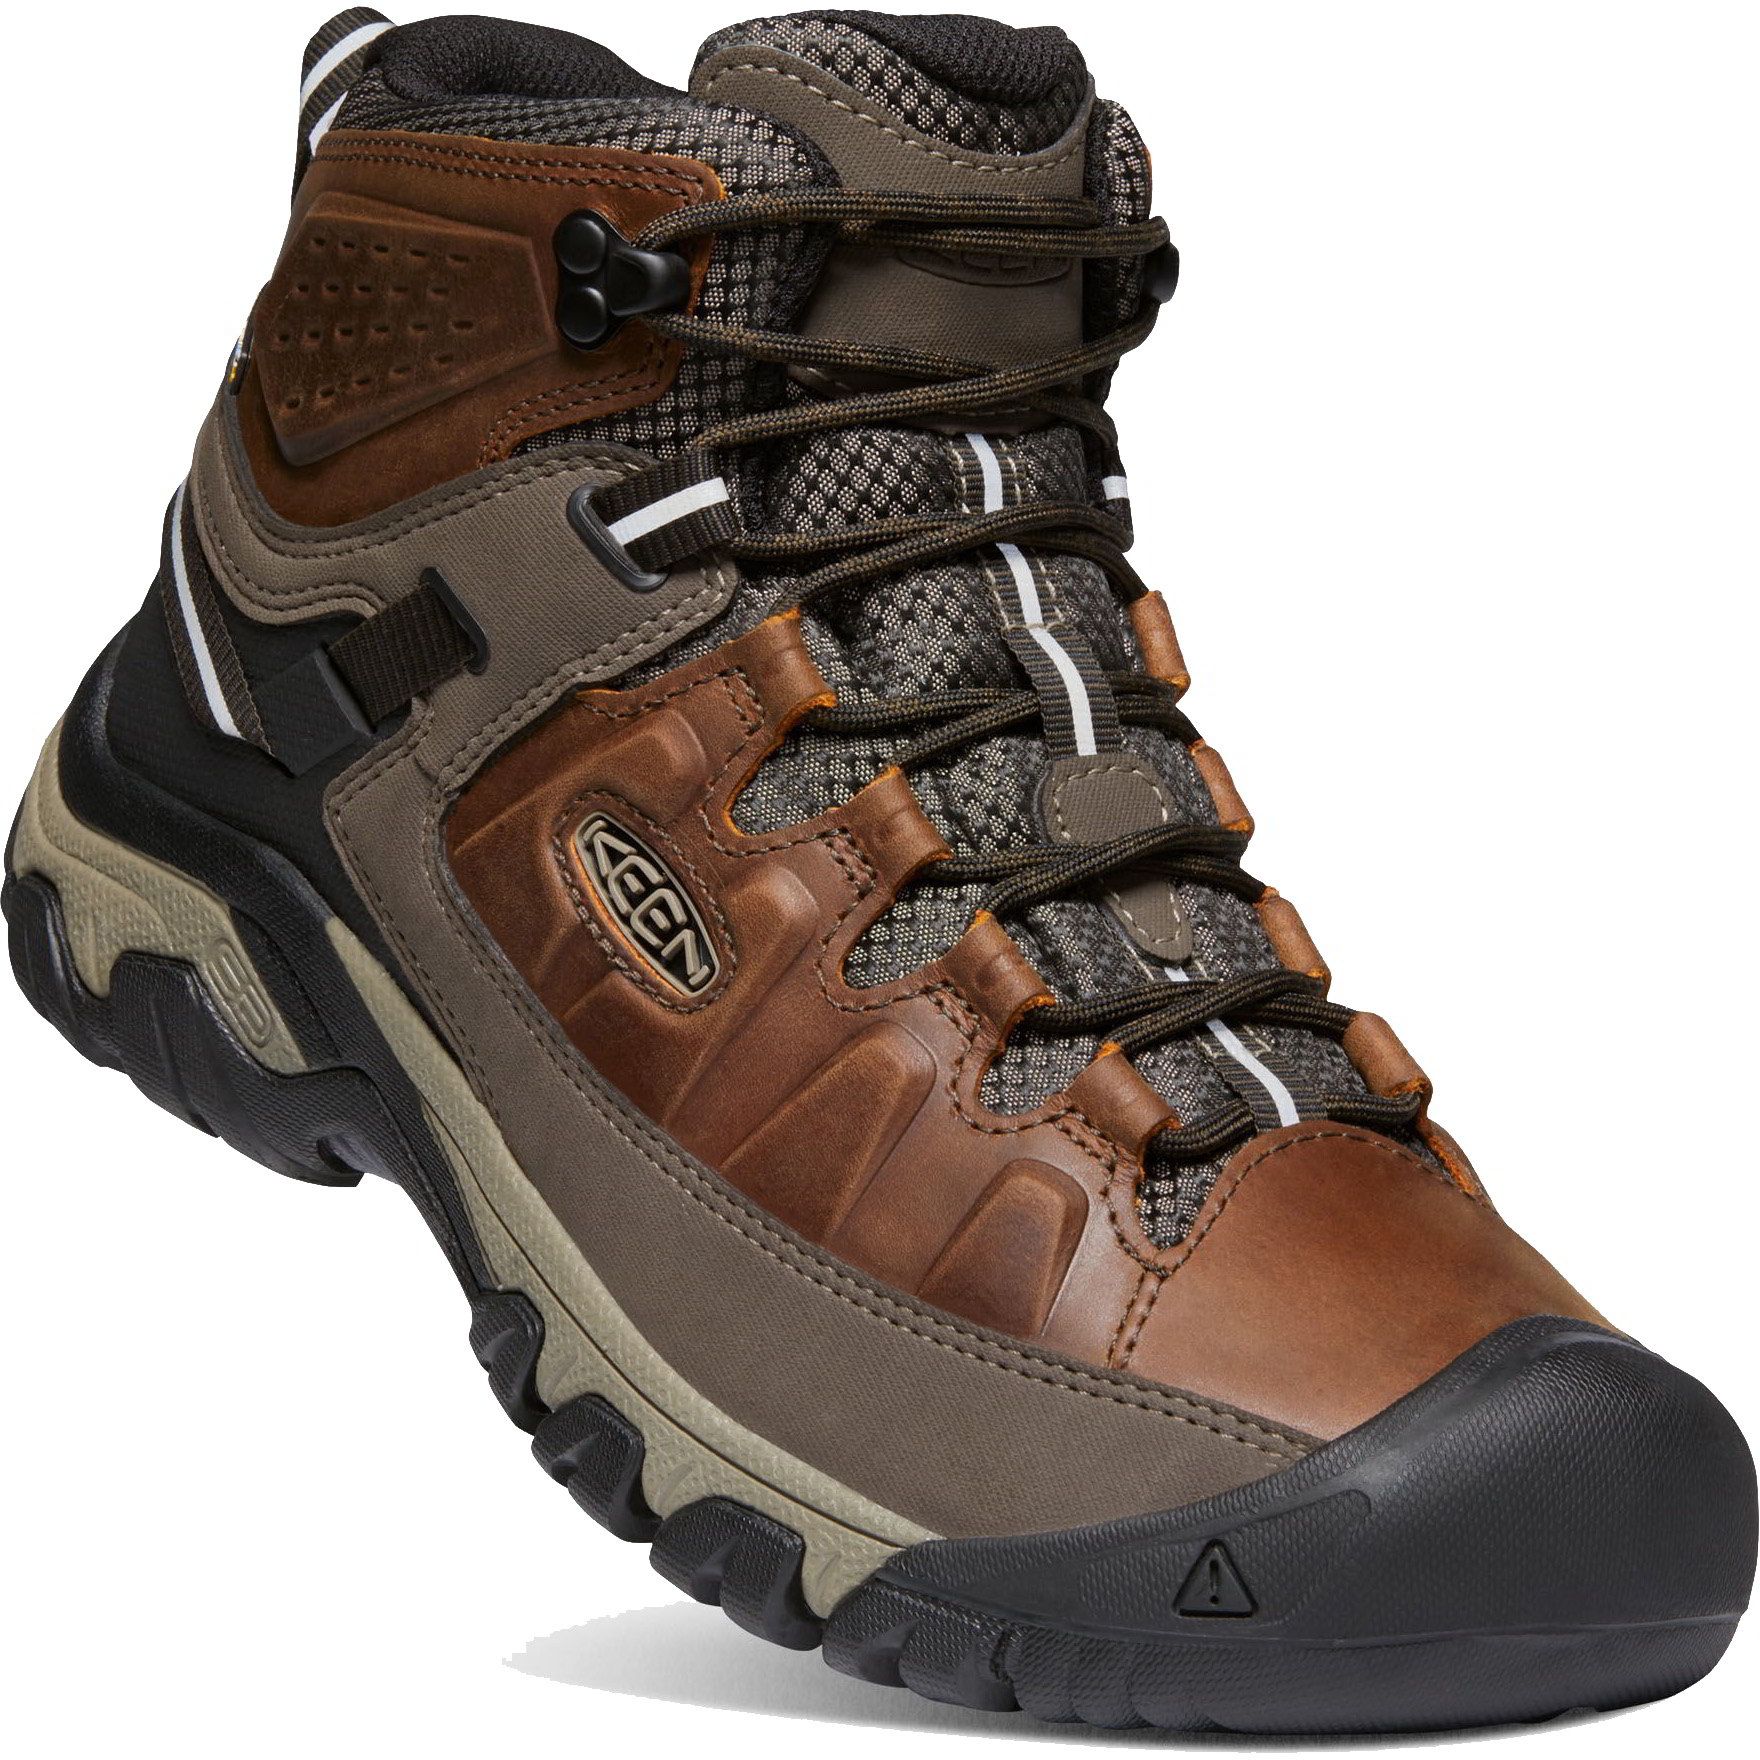 Keen Men's Targhee III Mid WP Waterproof Walking Hiking Boots - UK 9 / EU 43 / US 10